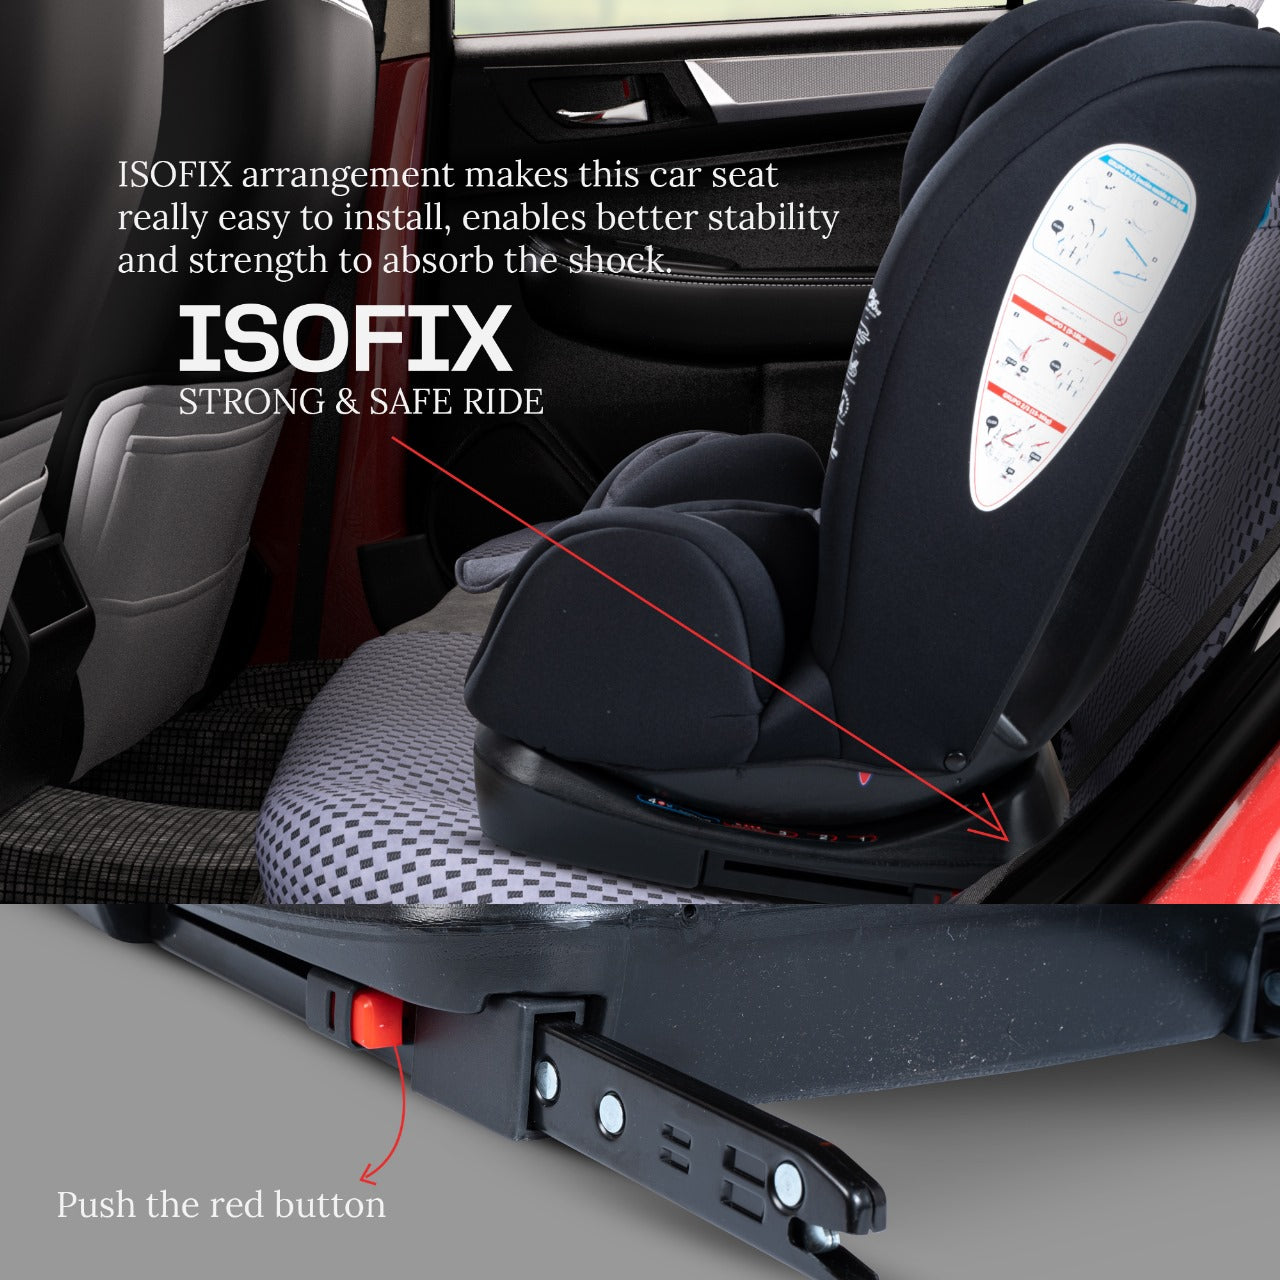 Minikin Defender Isofix Car Seat I 5 Point Safety Harness I NB - 12 Years I Black